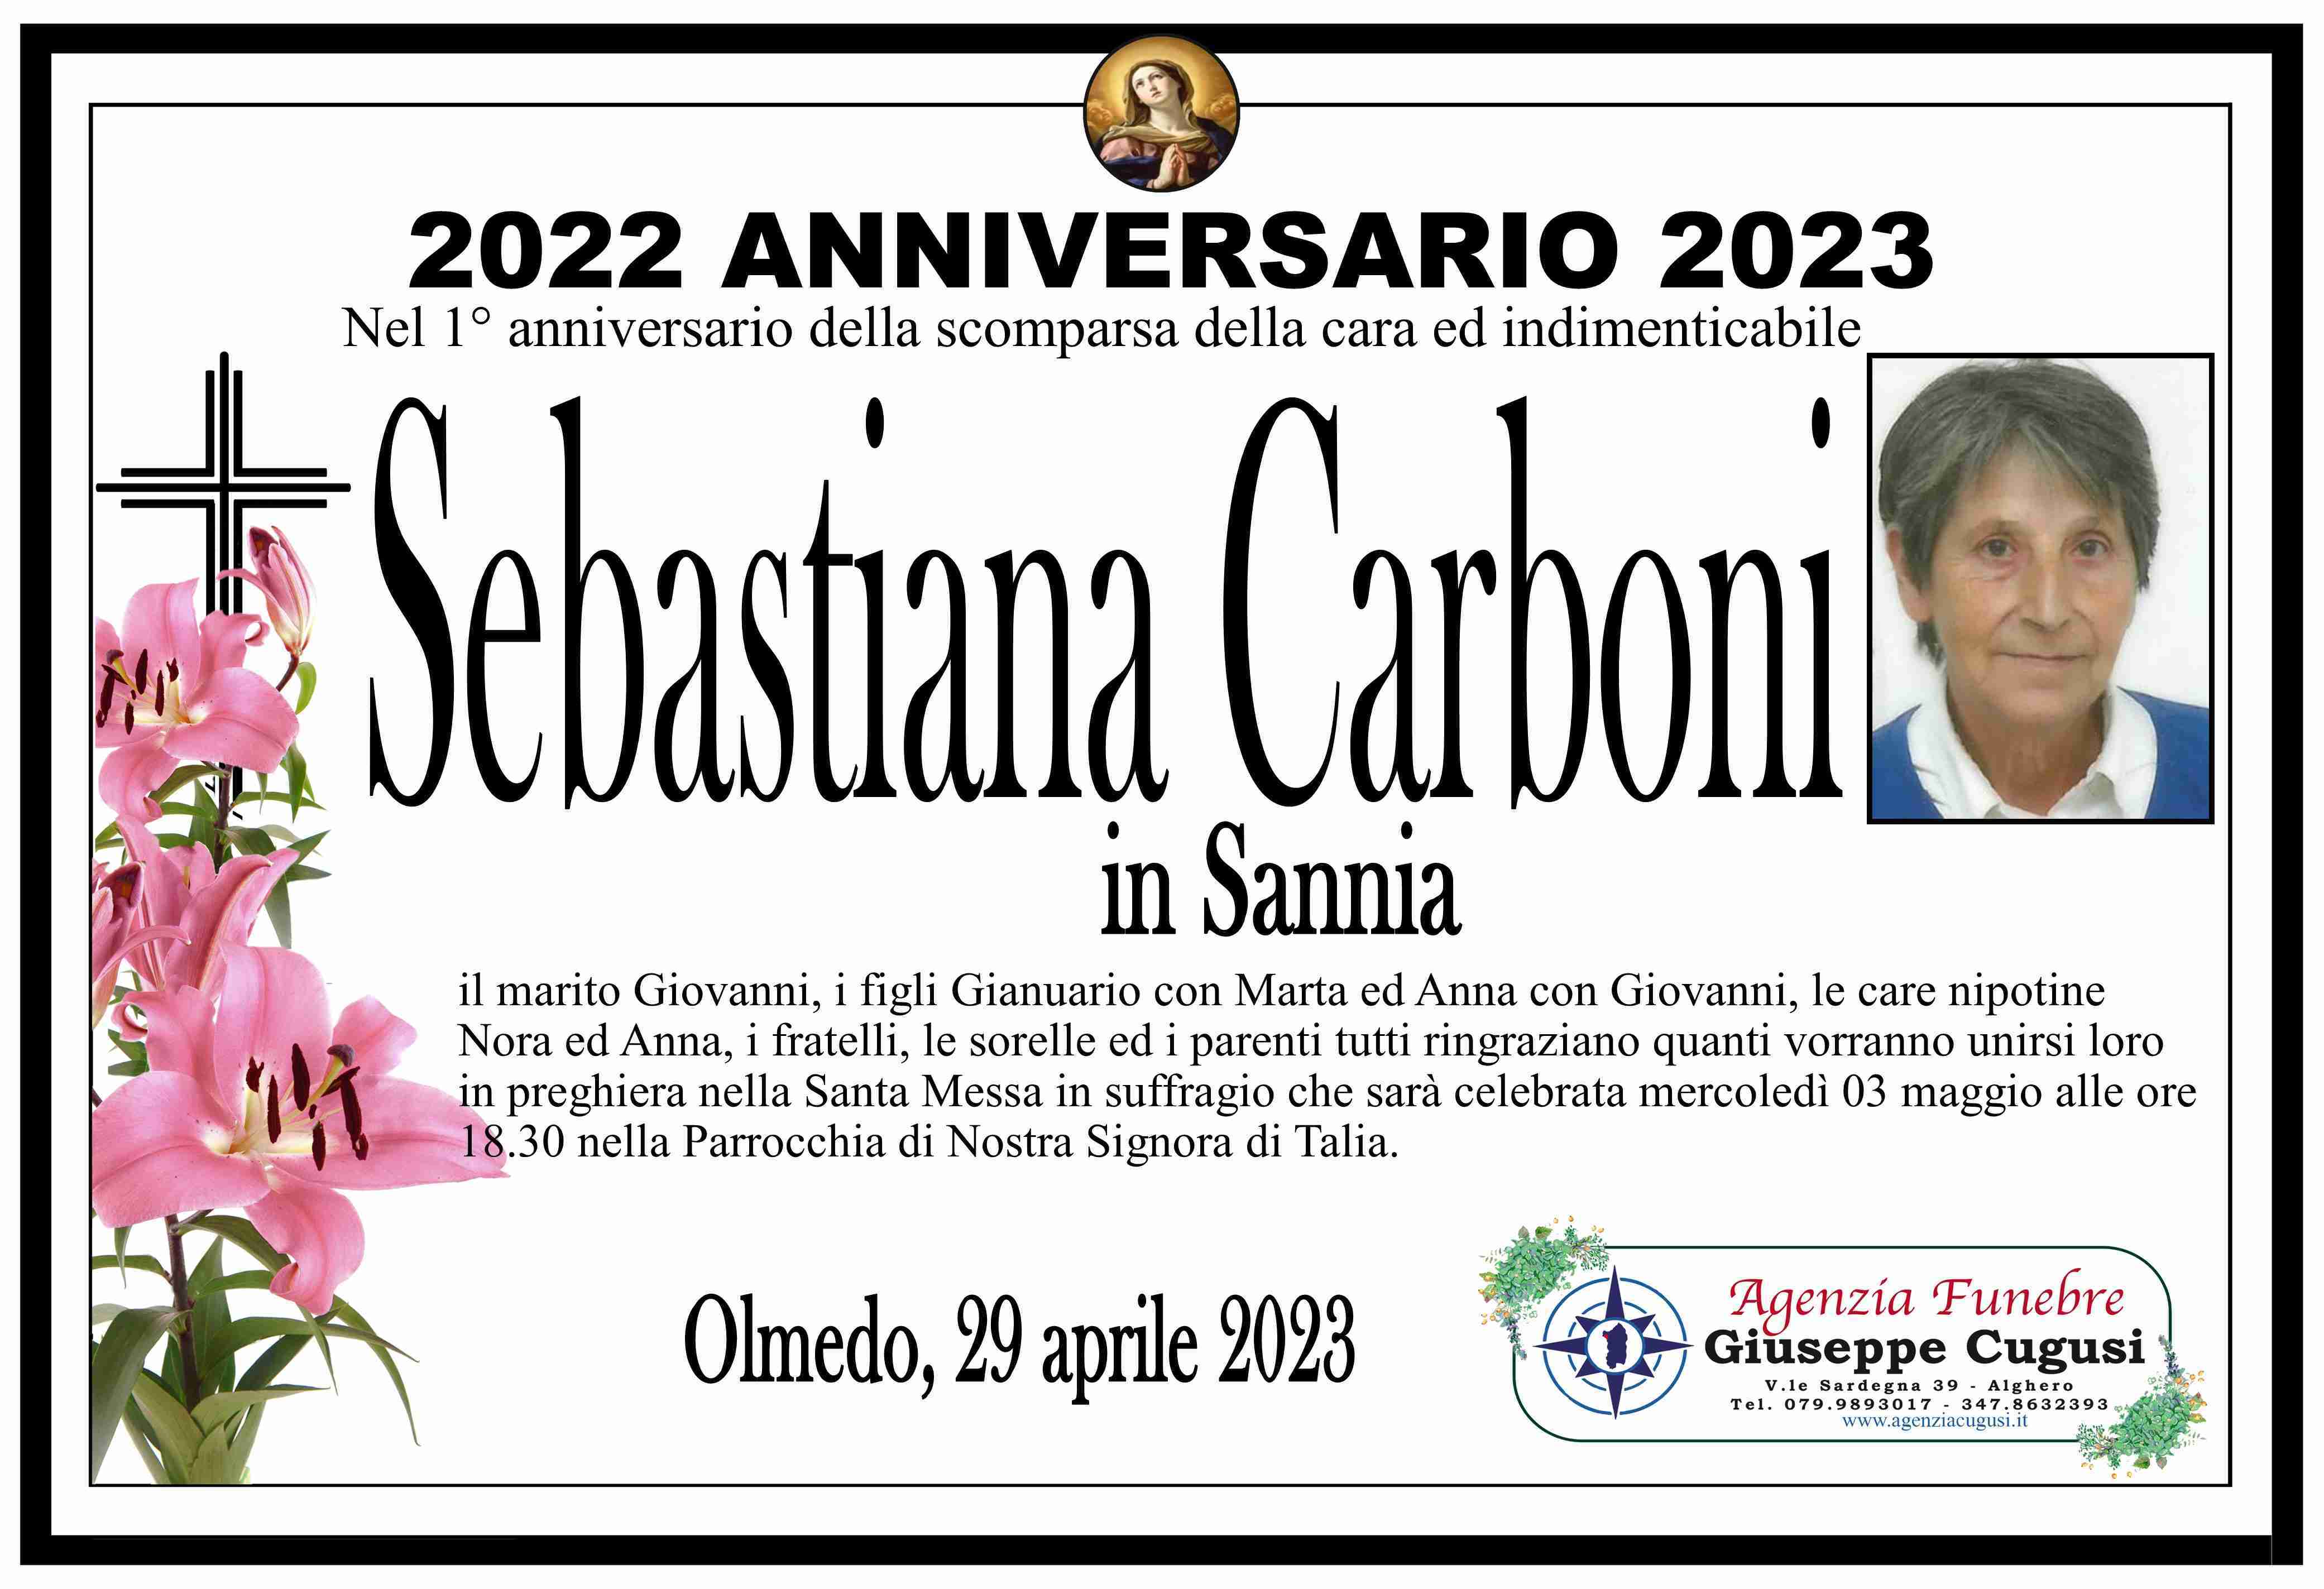 Sebastiana Carboni